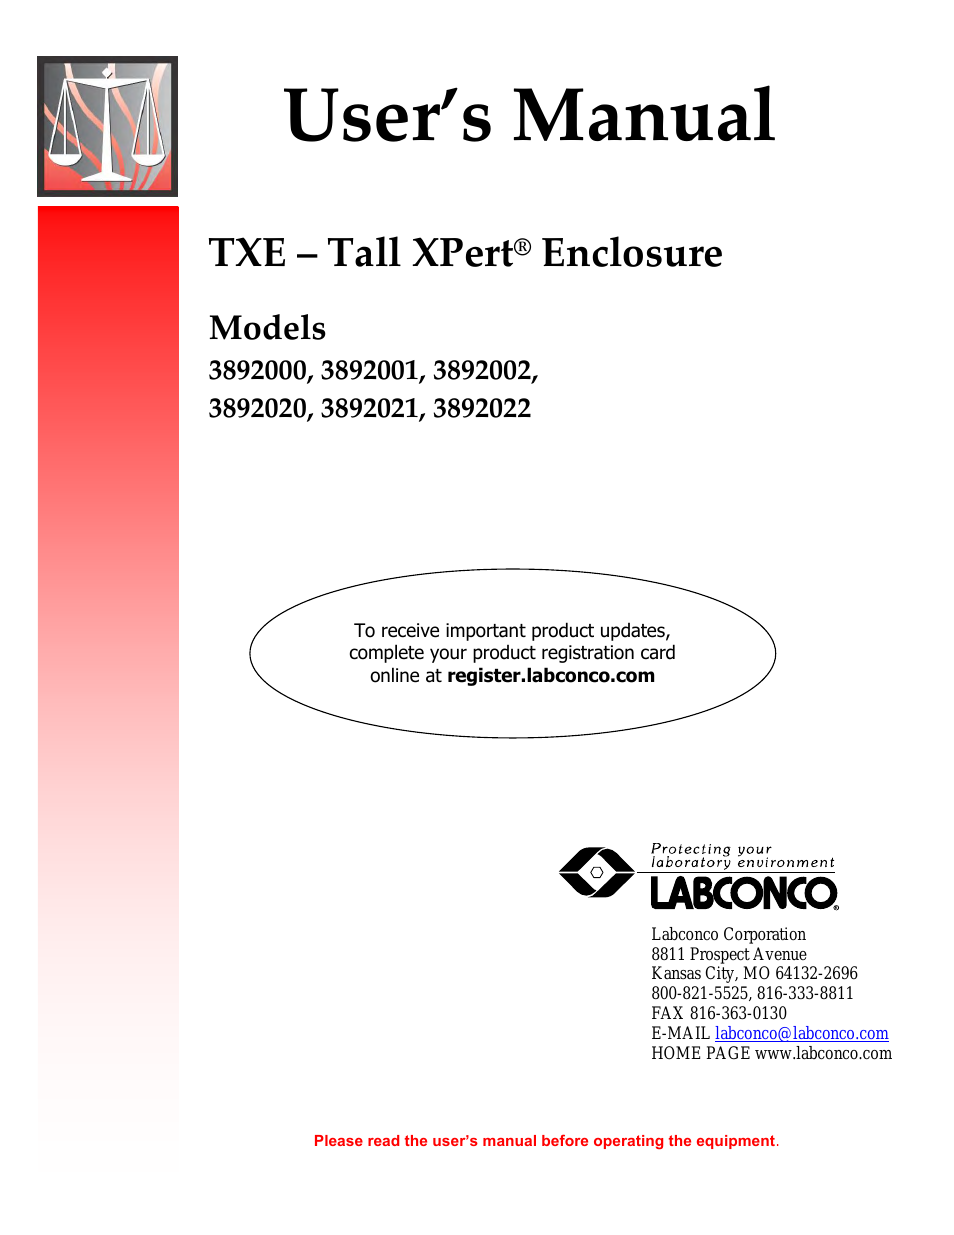 TXE Tall XPerEnclosure 3892021